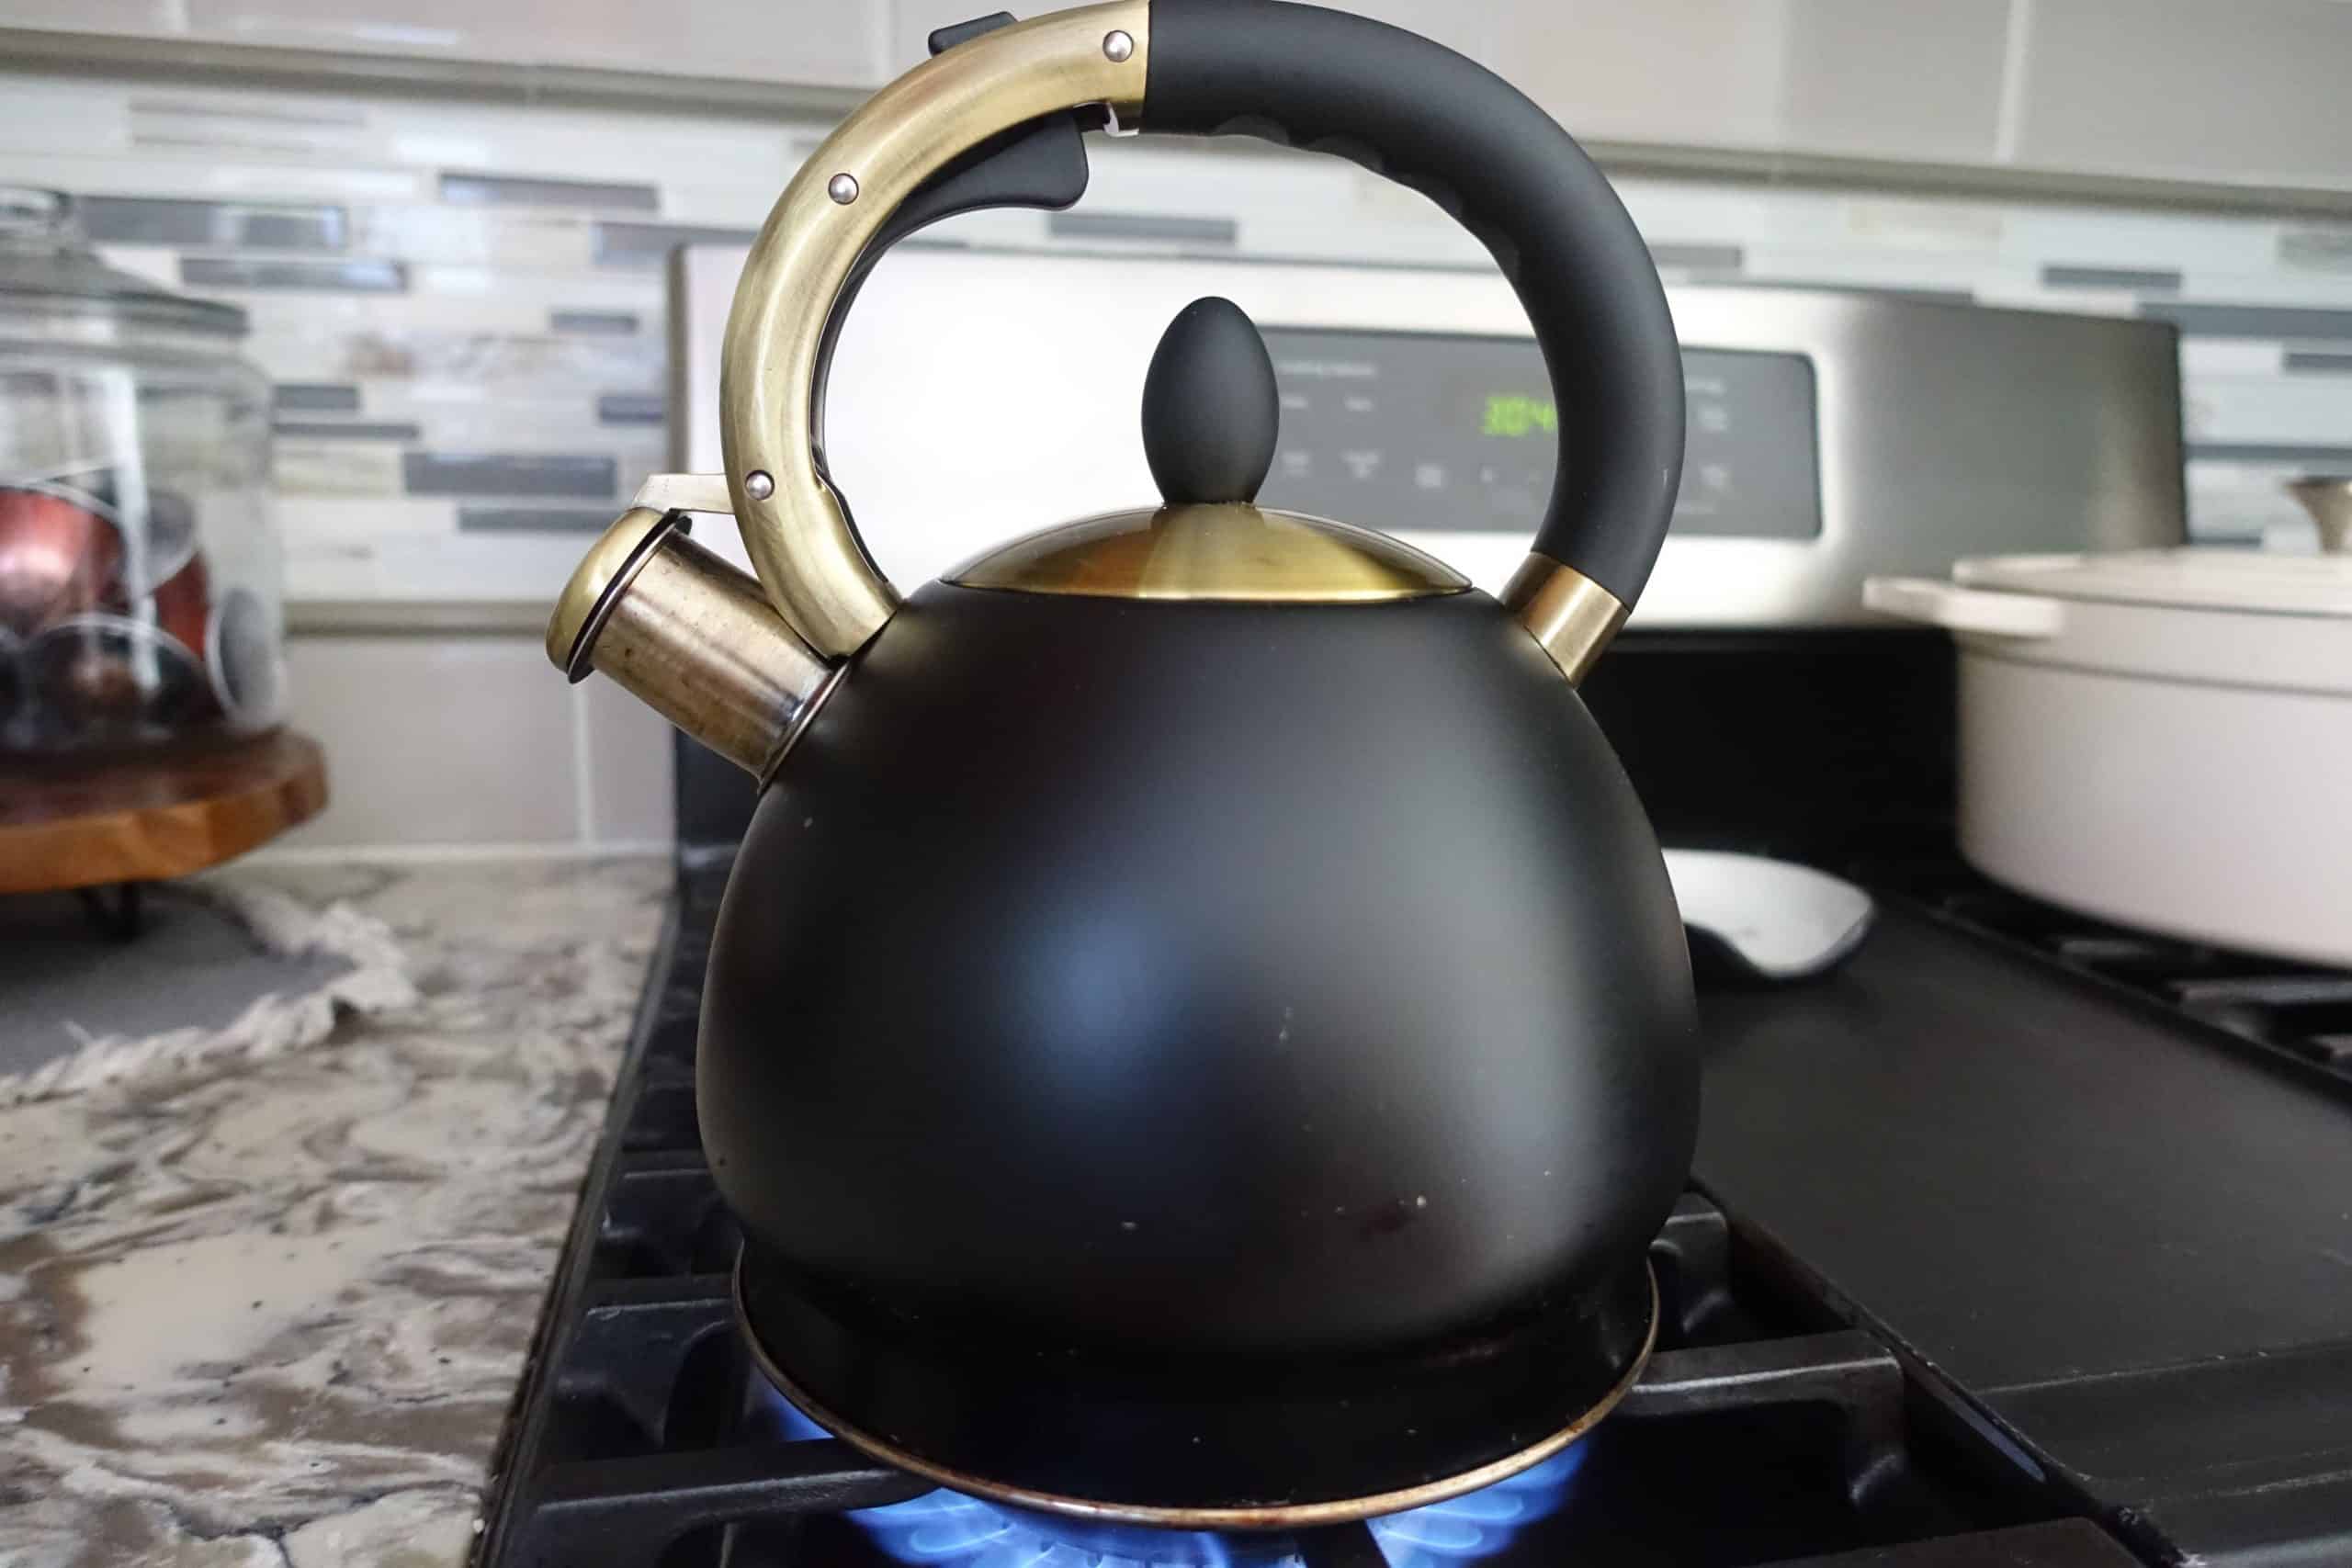 matte black tea kettle on gas stove with burner on